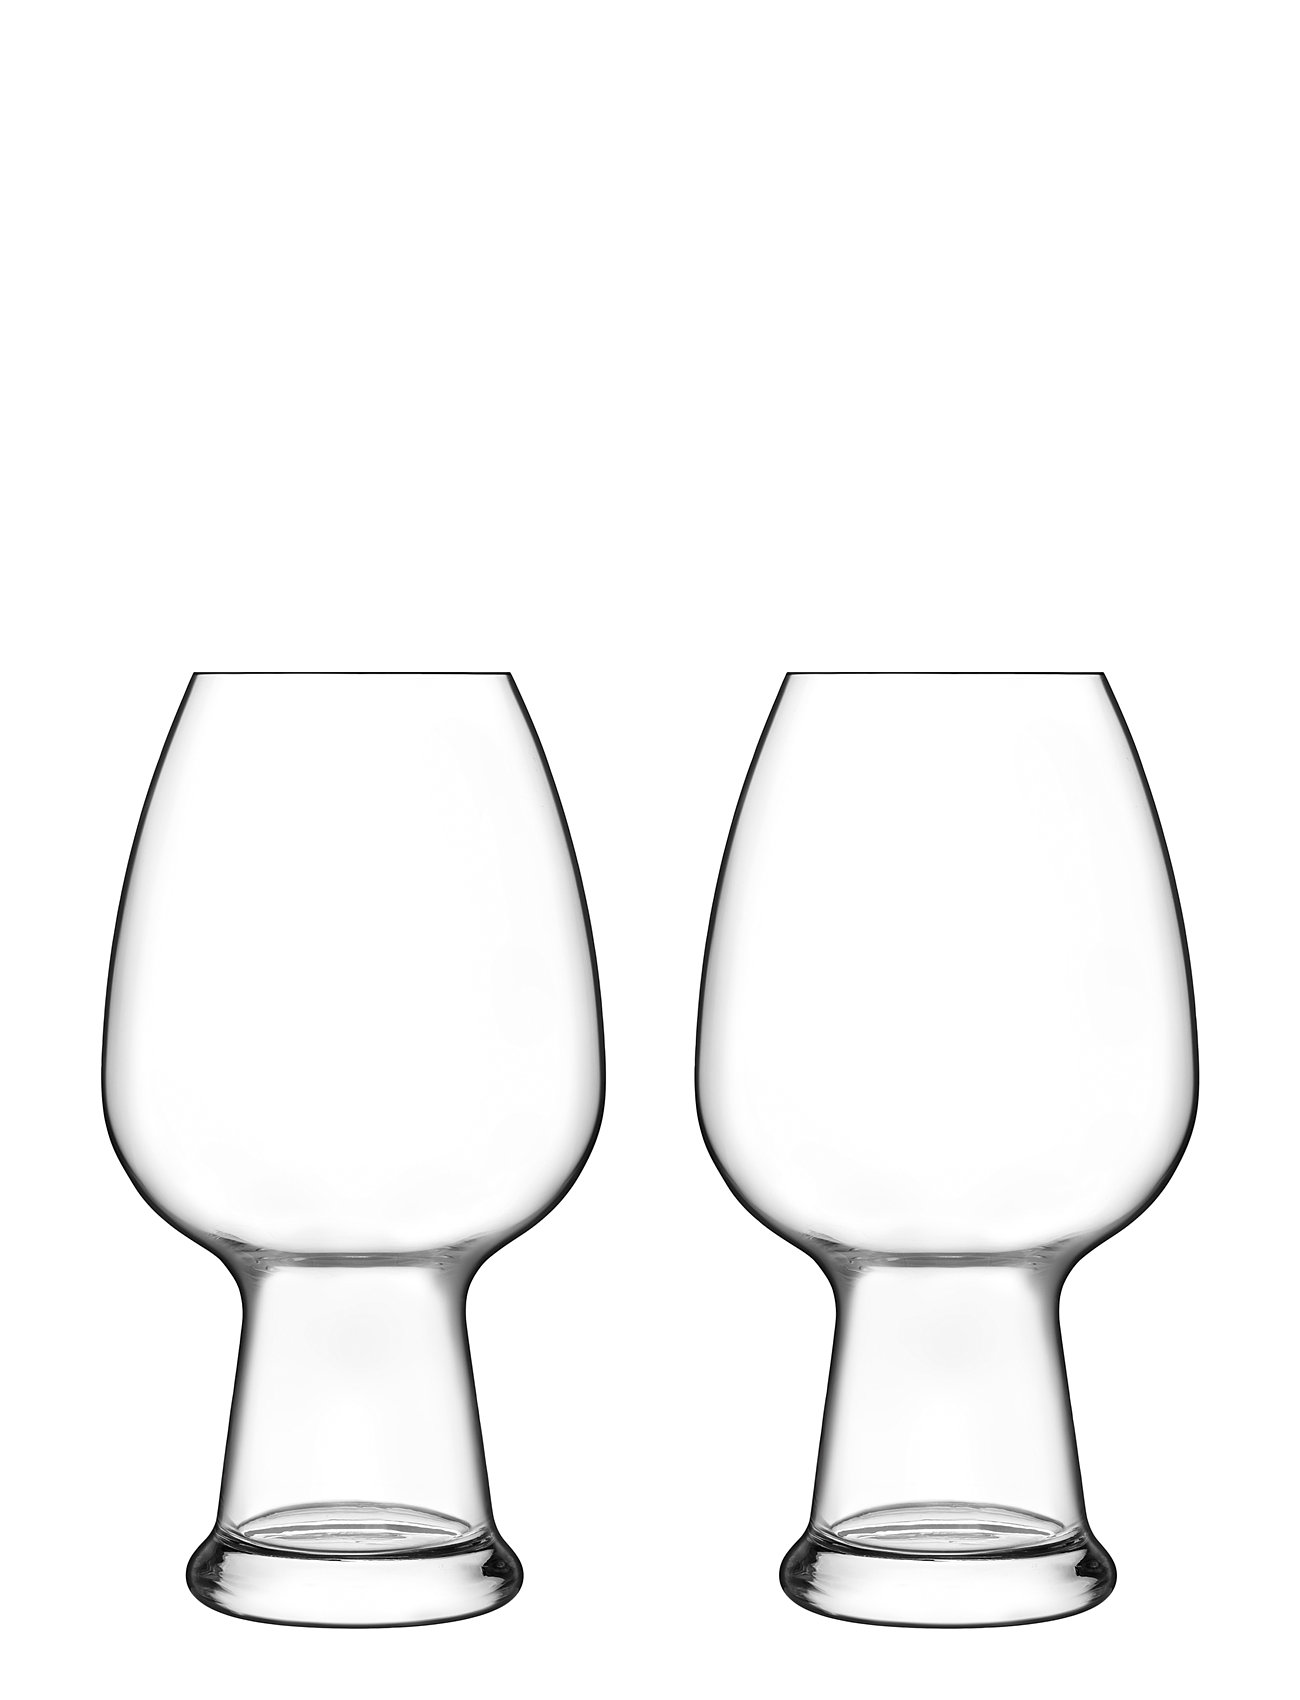 Ølglas Hvede Birrateque Home Tableware Glass Beer Glass Nude Luigi Bormioli